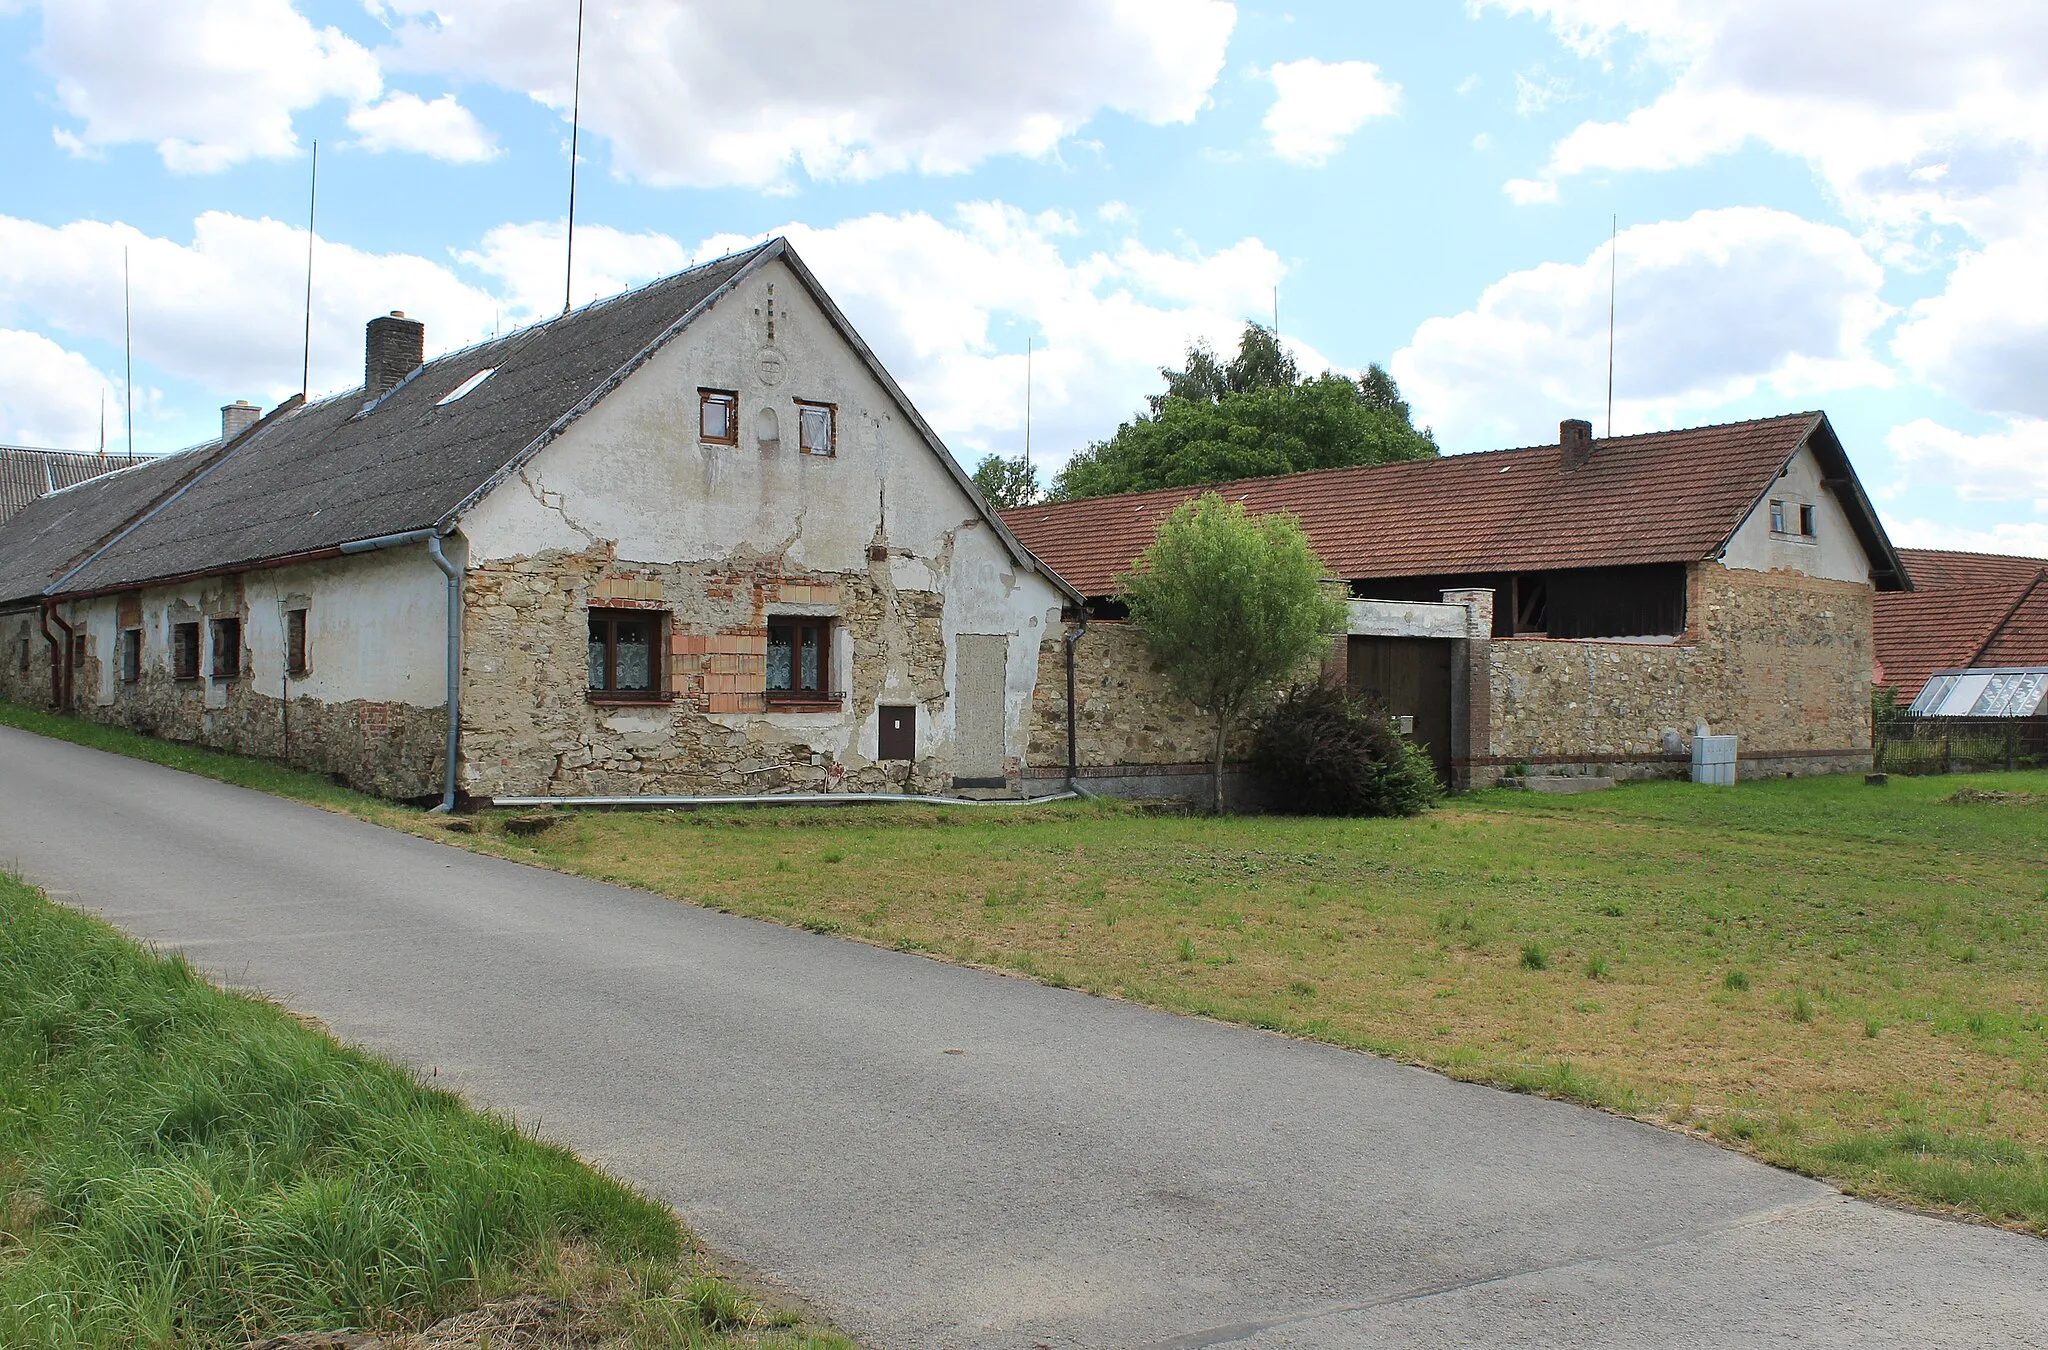 Photo showing: House No 6 in Lhota, part of Lhota-Vlasenice, Czech Republic.